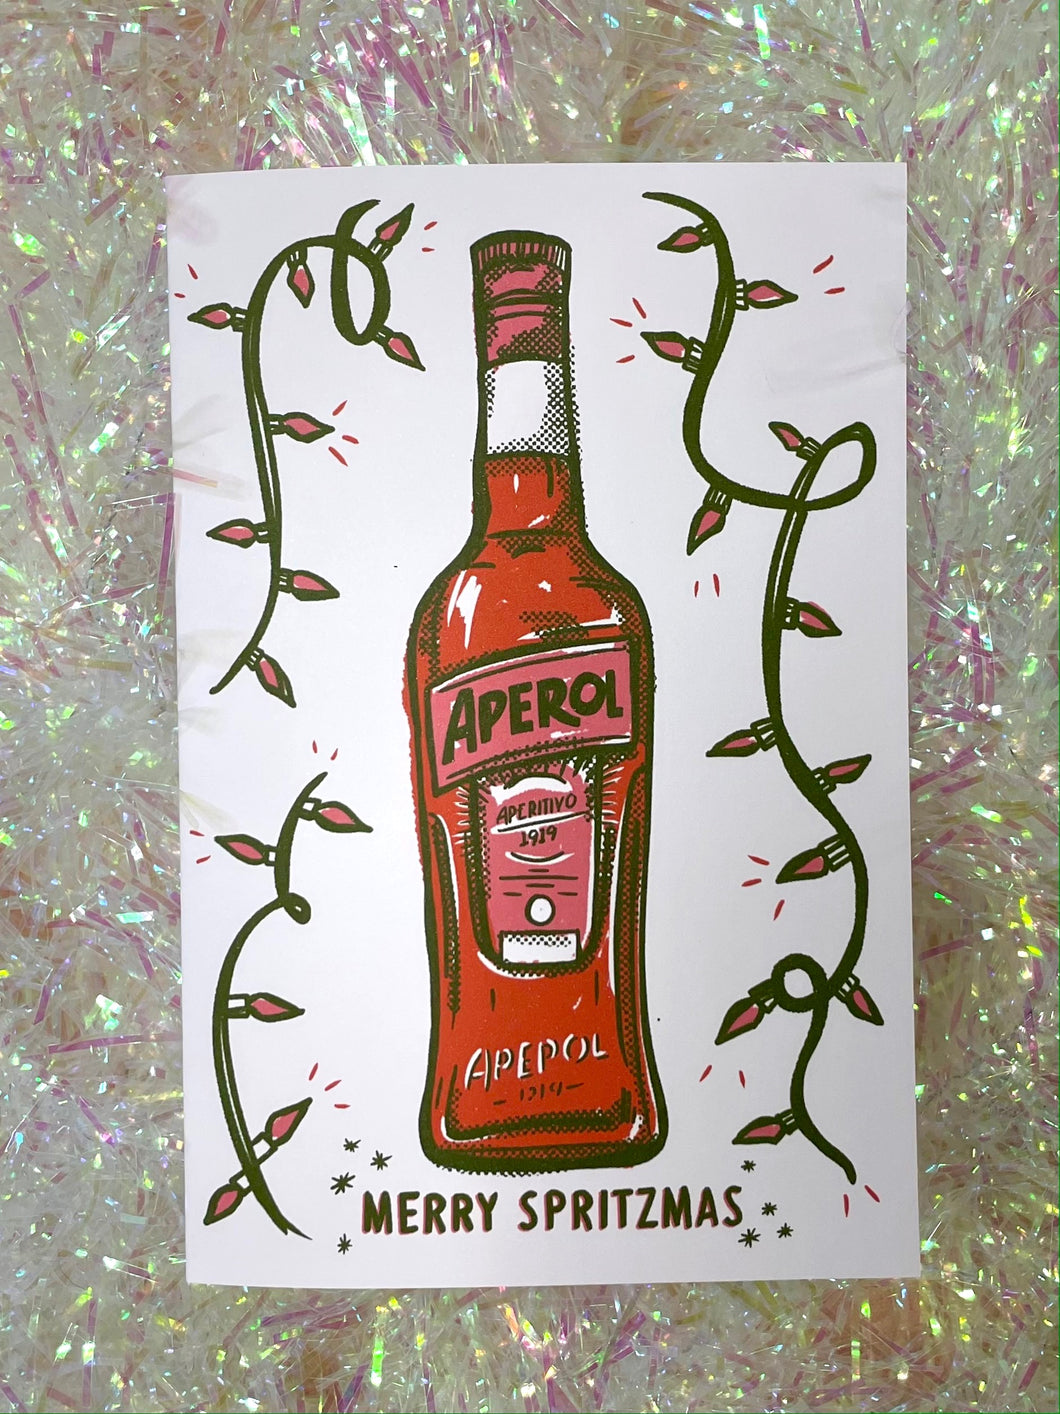 Merry Spritzmas- Aperol